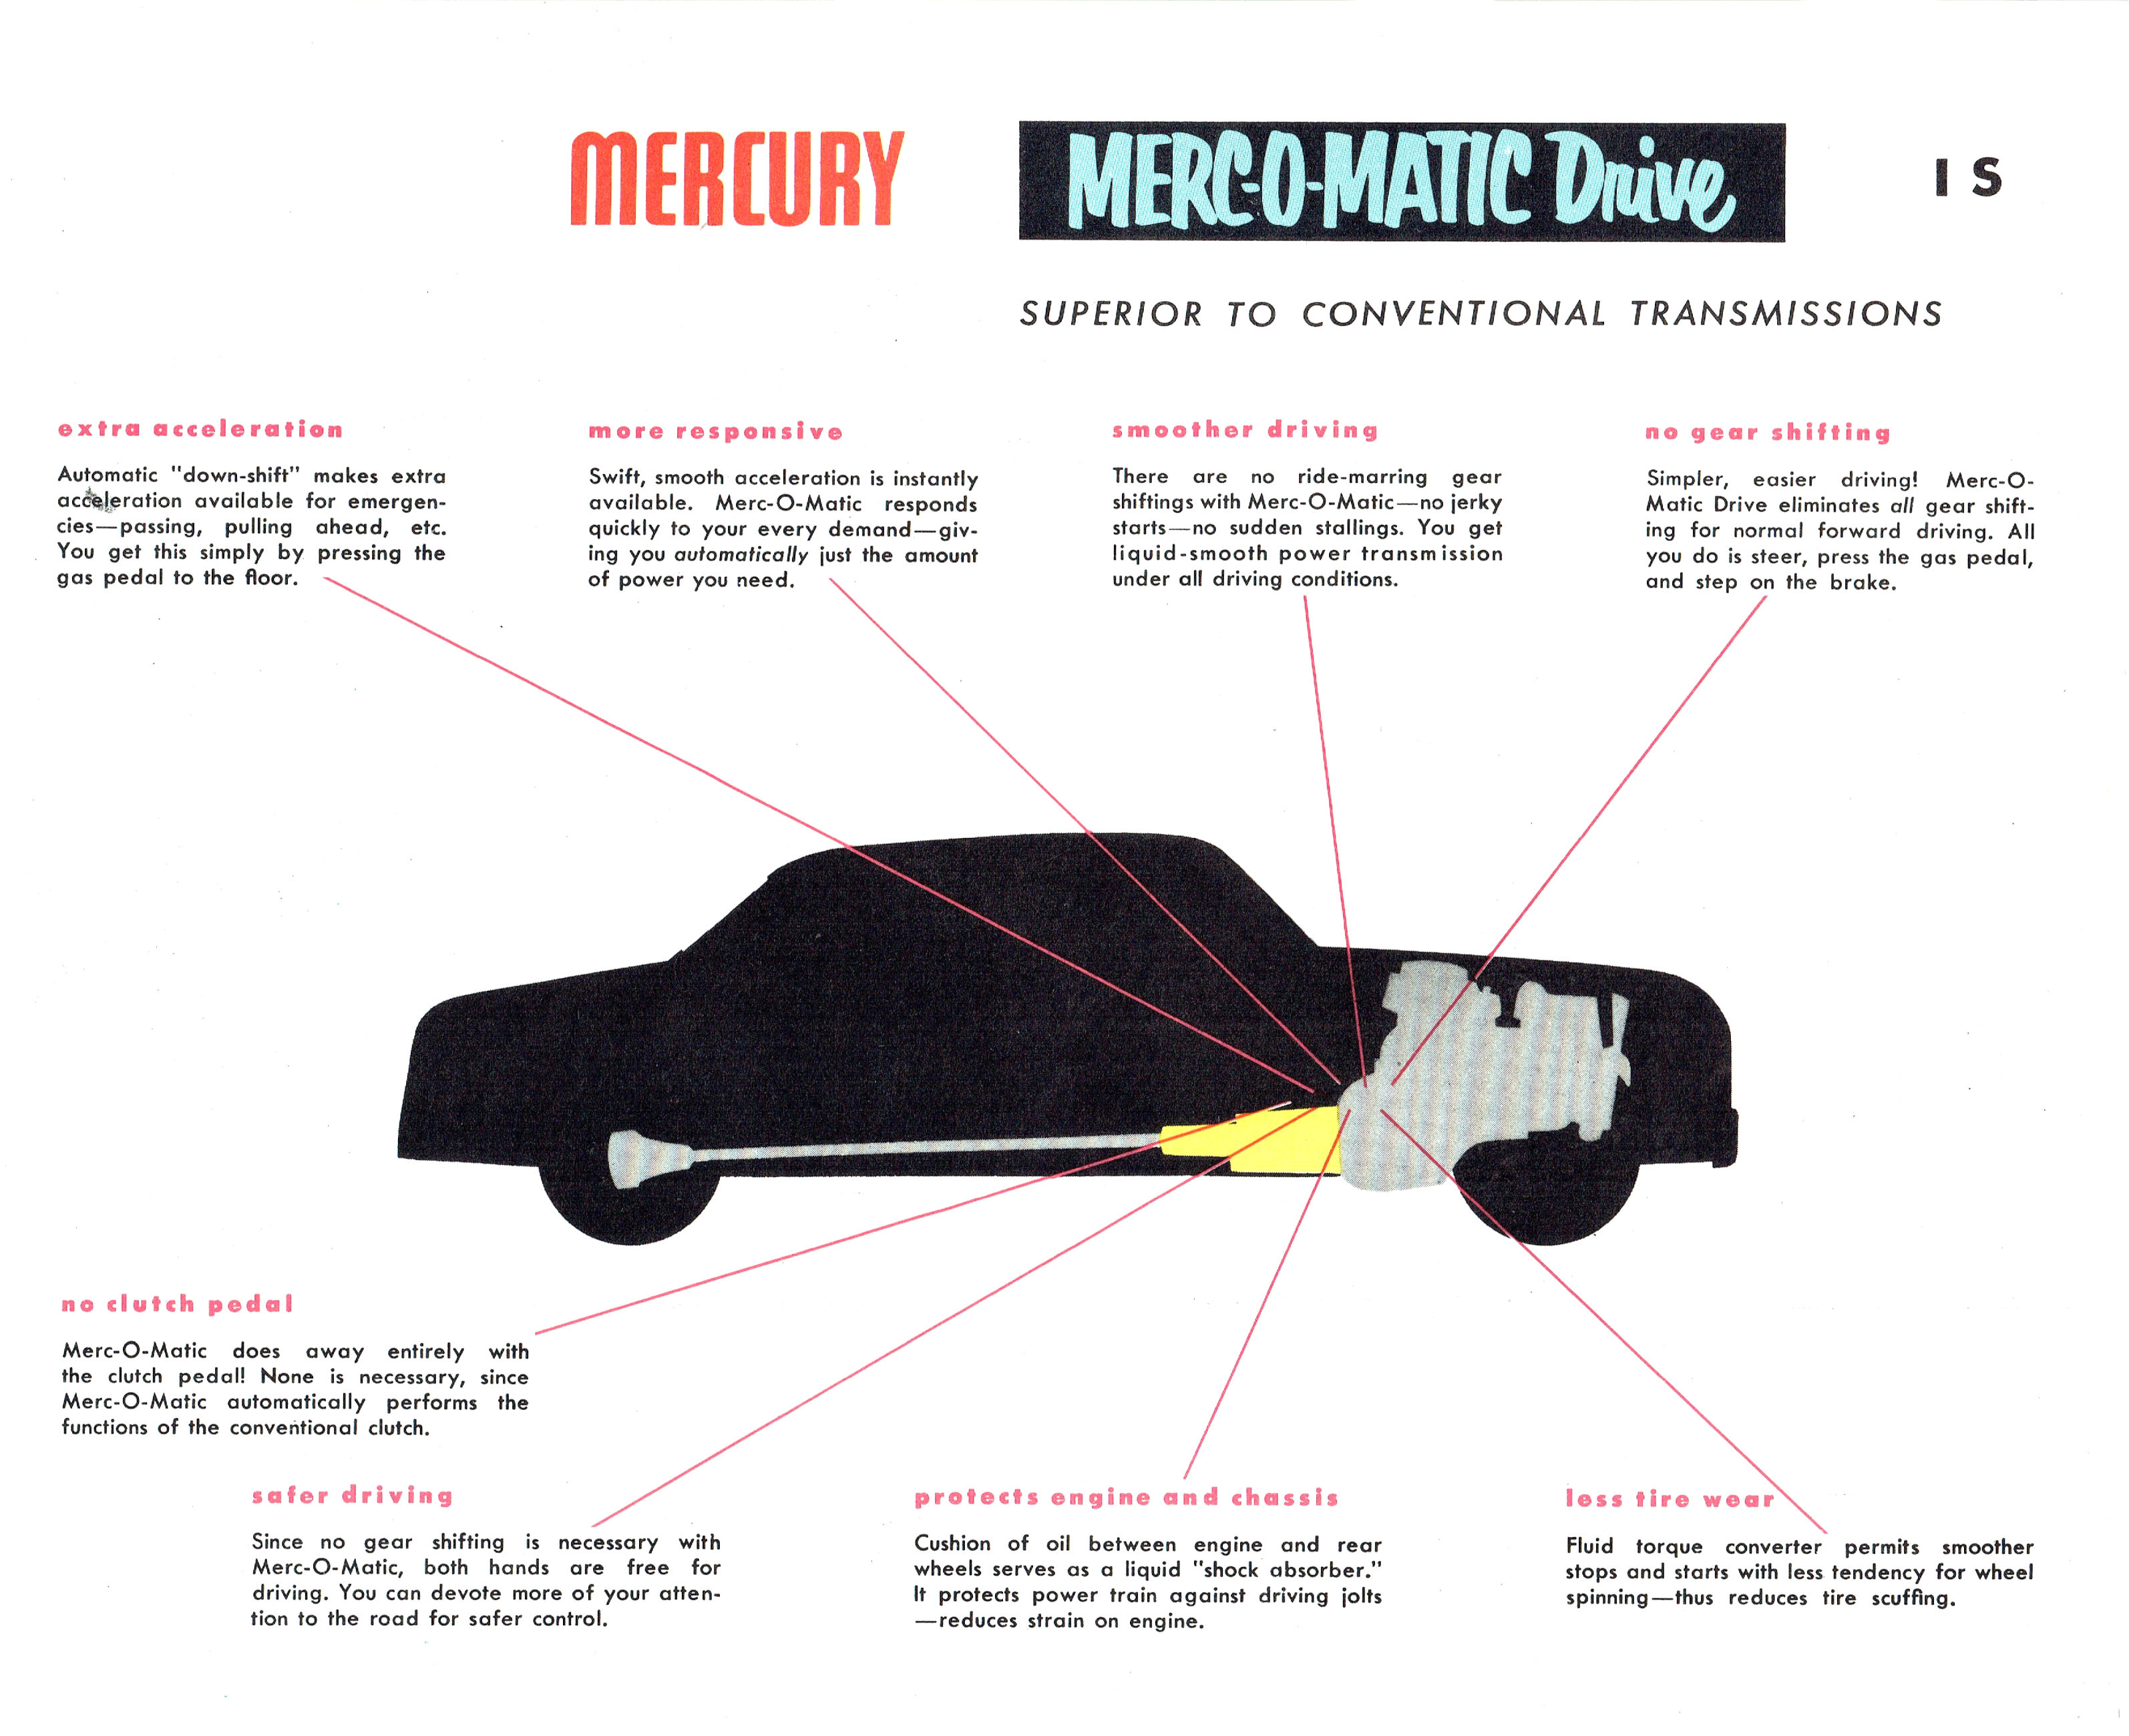 1951 Mercury Merc-O-Matic Drive-14